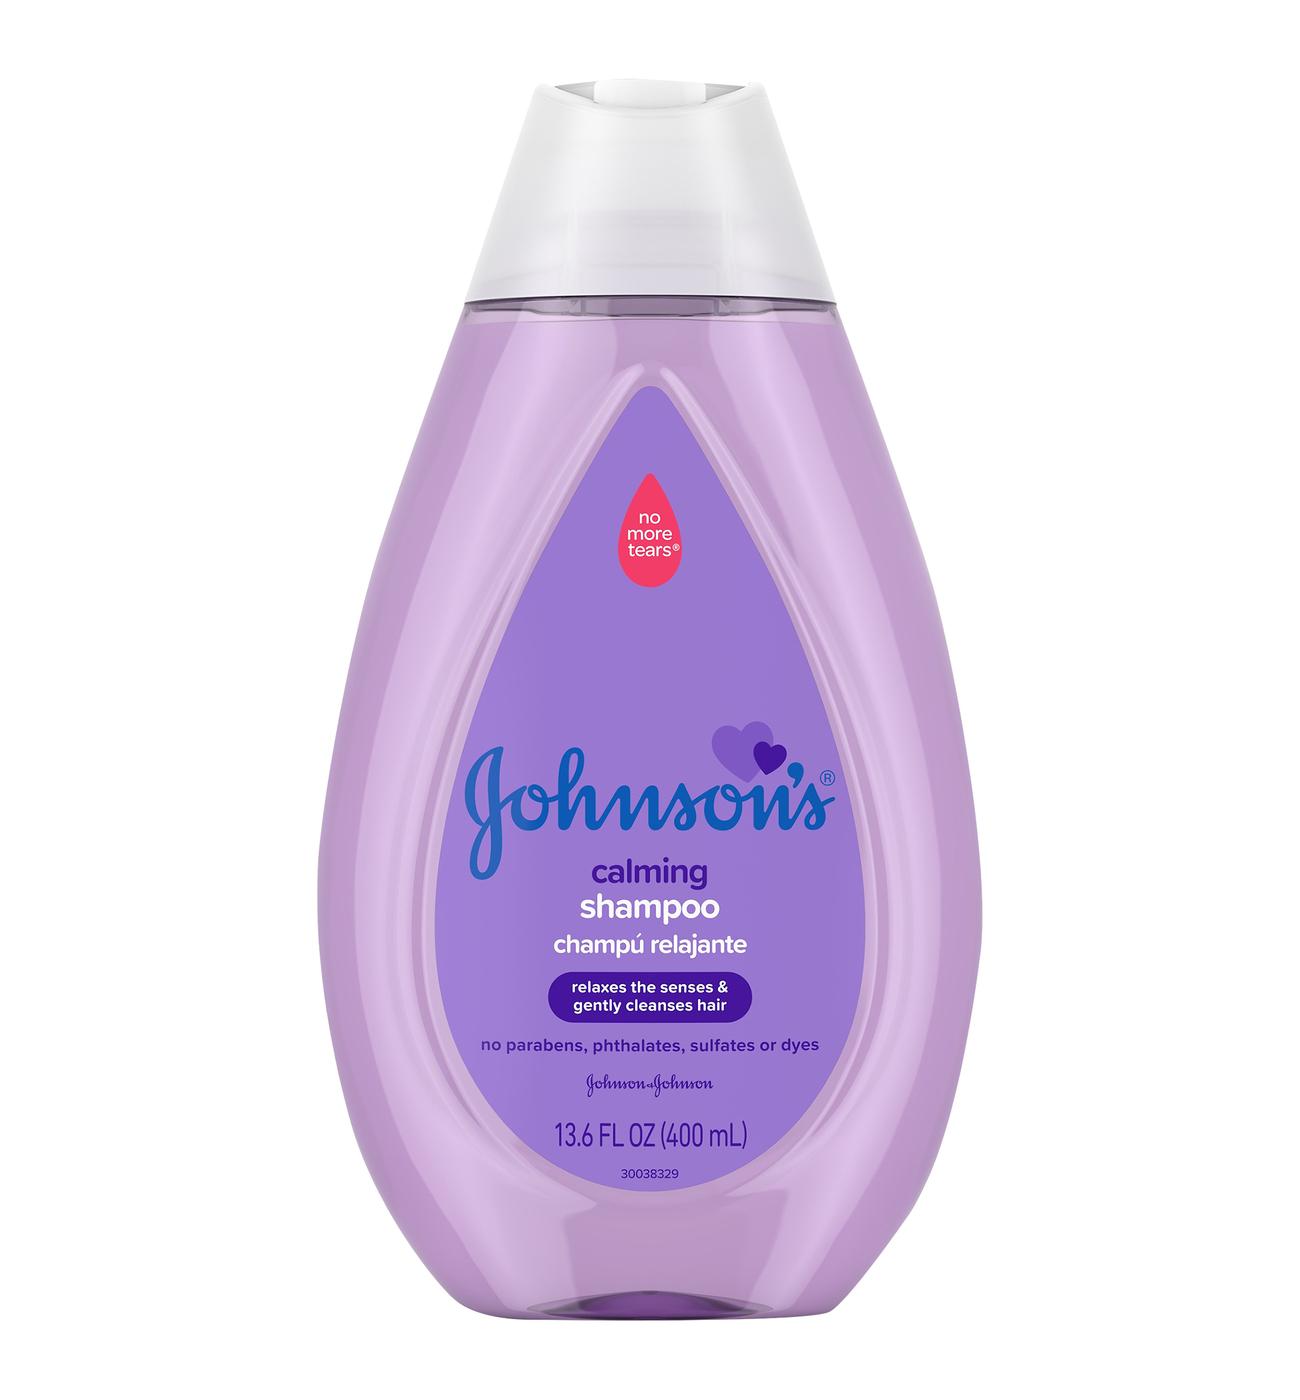 Buy Johnson's Baby Chamomile Shampoo · USA